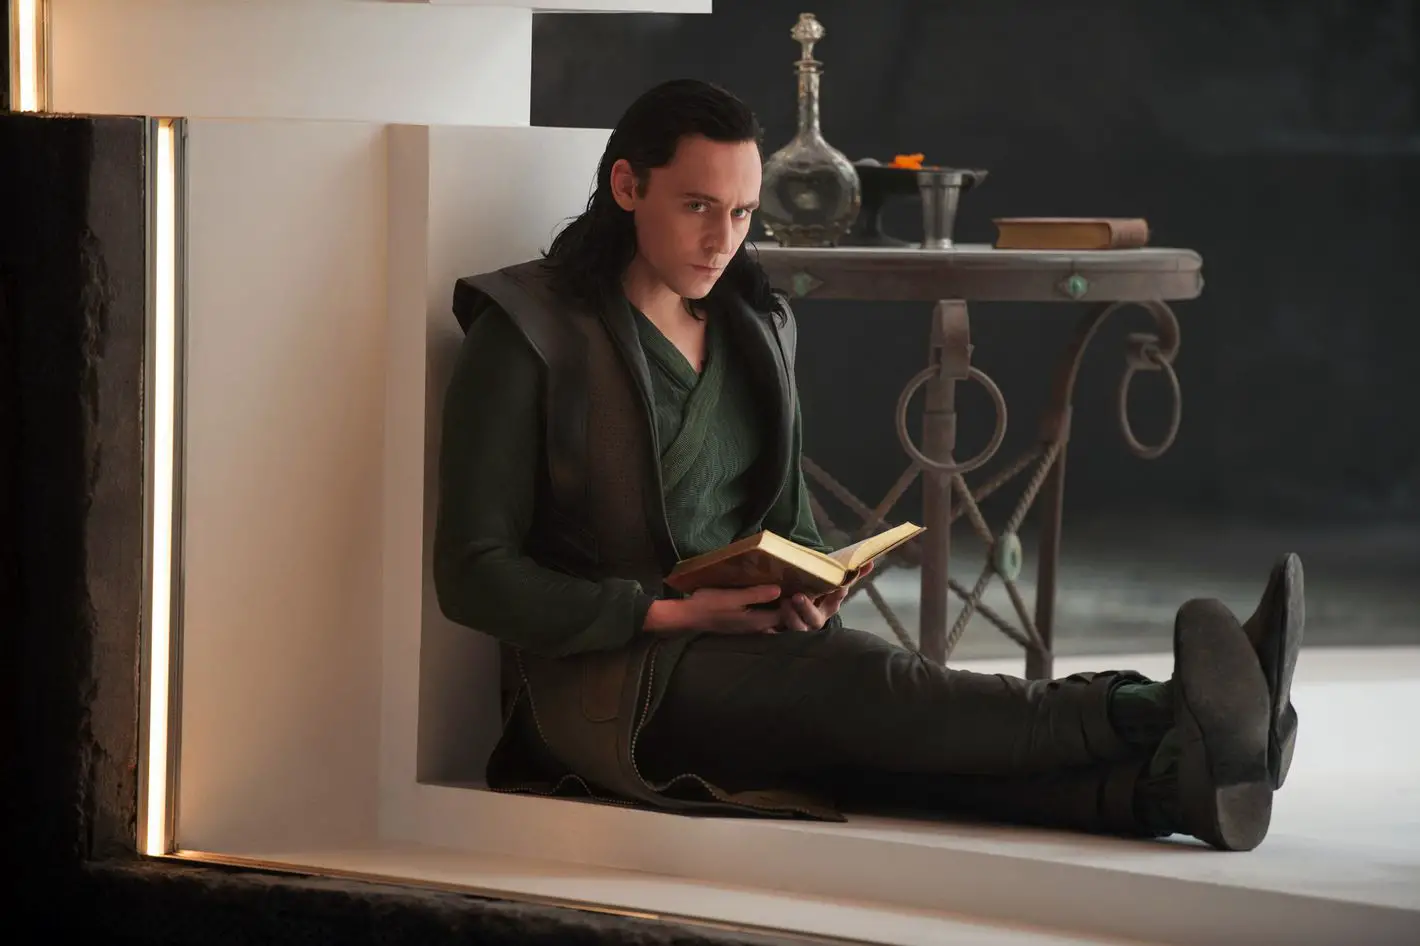 Loki 001: Required reading